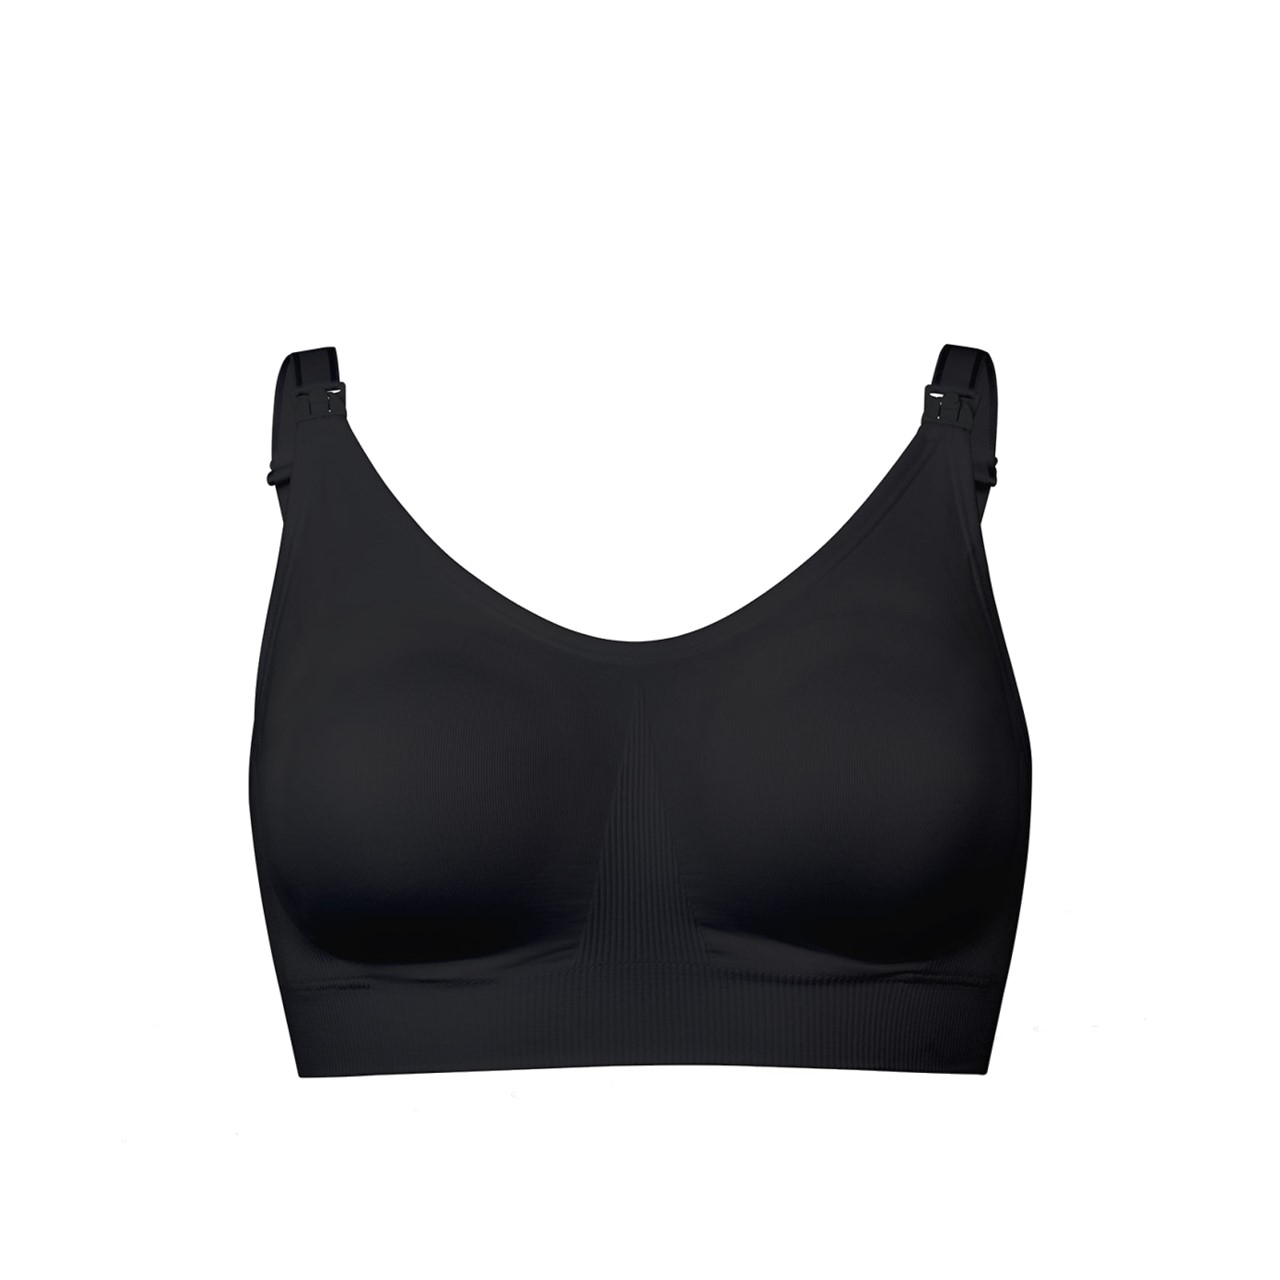 https://static.beautytocare.com/media/catalog/product/m/e/medela-ultimate-bodyfit-bra-black-small-size-x1.jpg